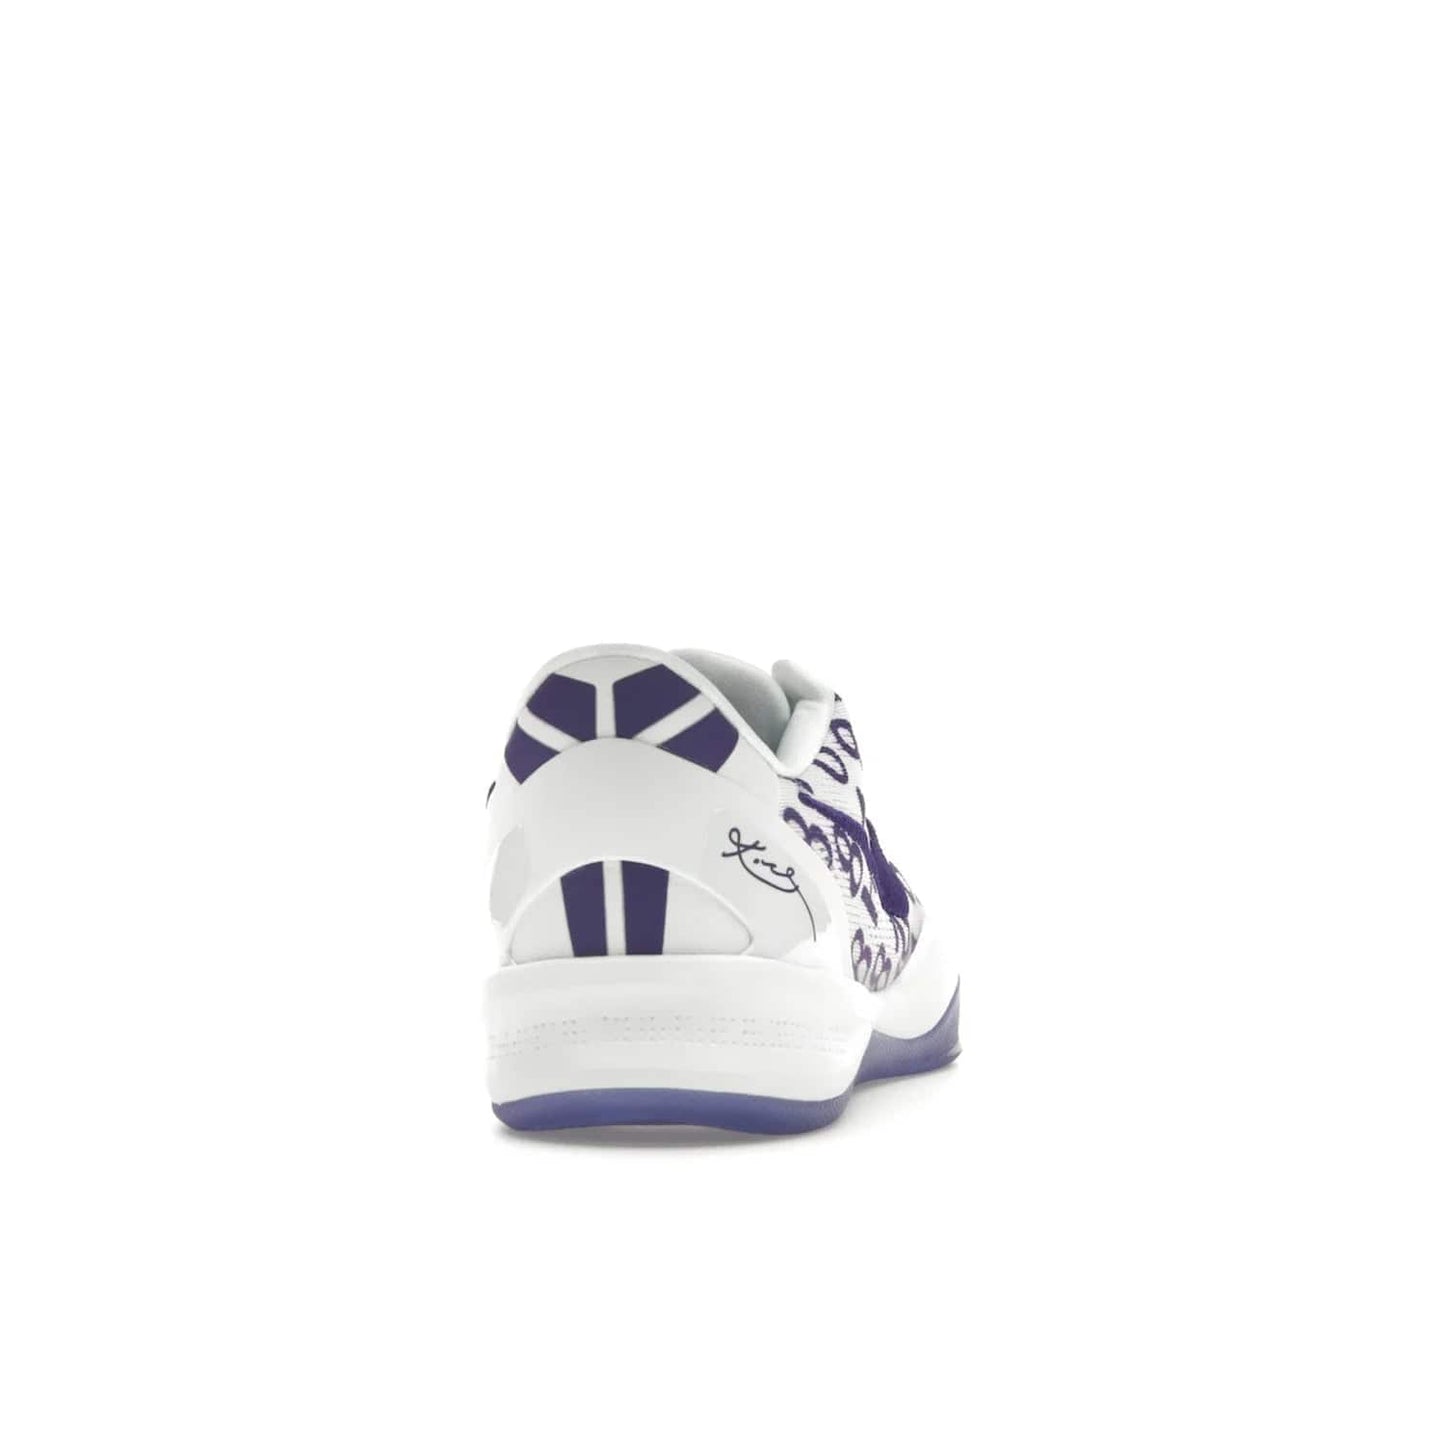 Nike Kobe 8 Protro Court Purple - Image 29 - Only at www.BallersClubKickz.com - 